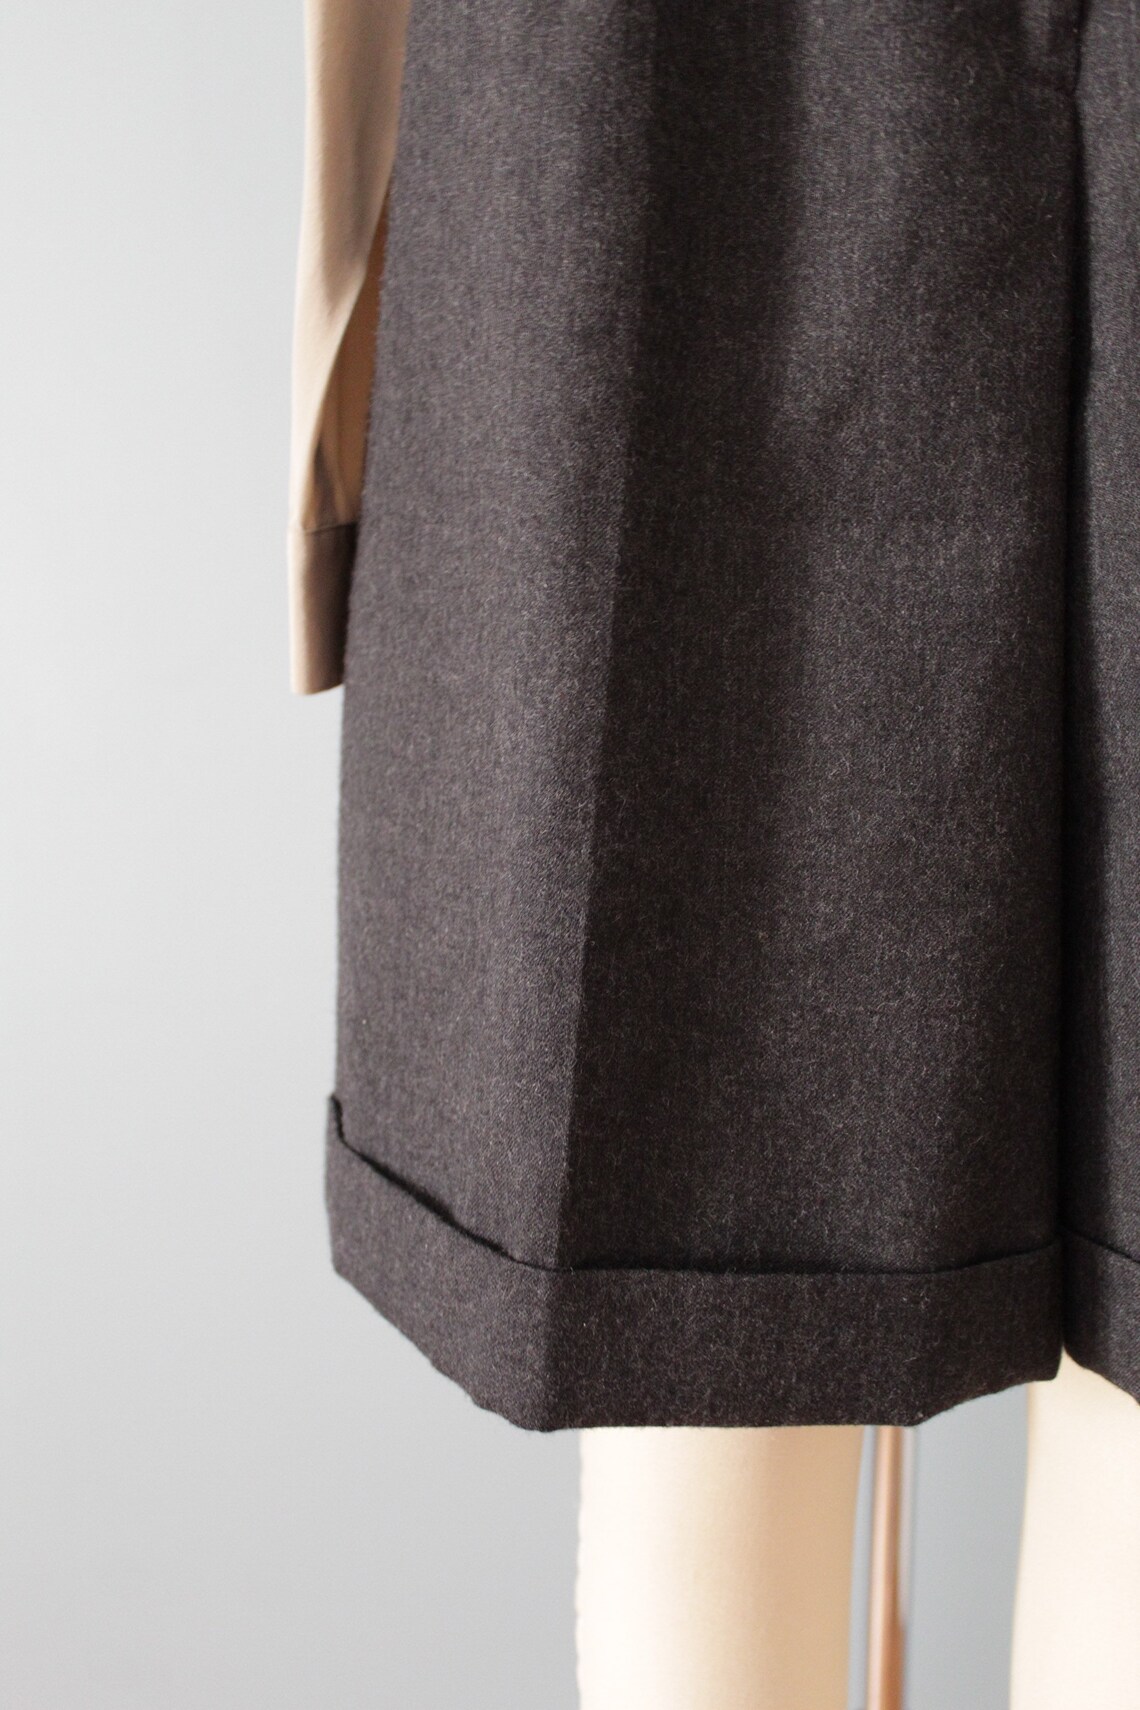 CHARCOAL wool shorts high waisted cuffed shorts minimalist | Etsy